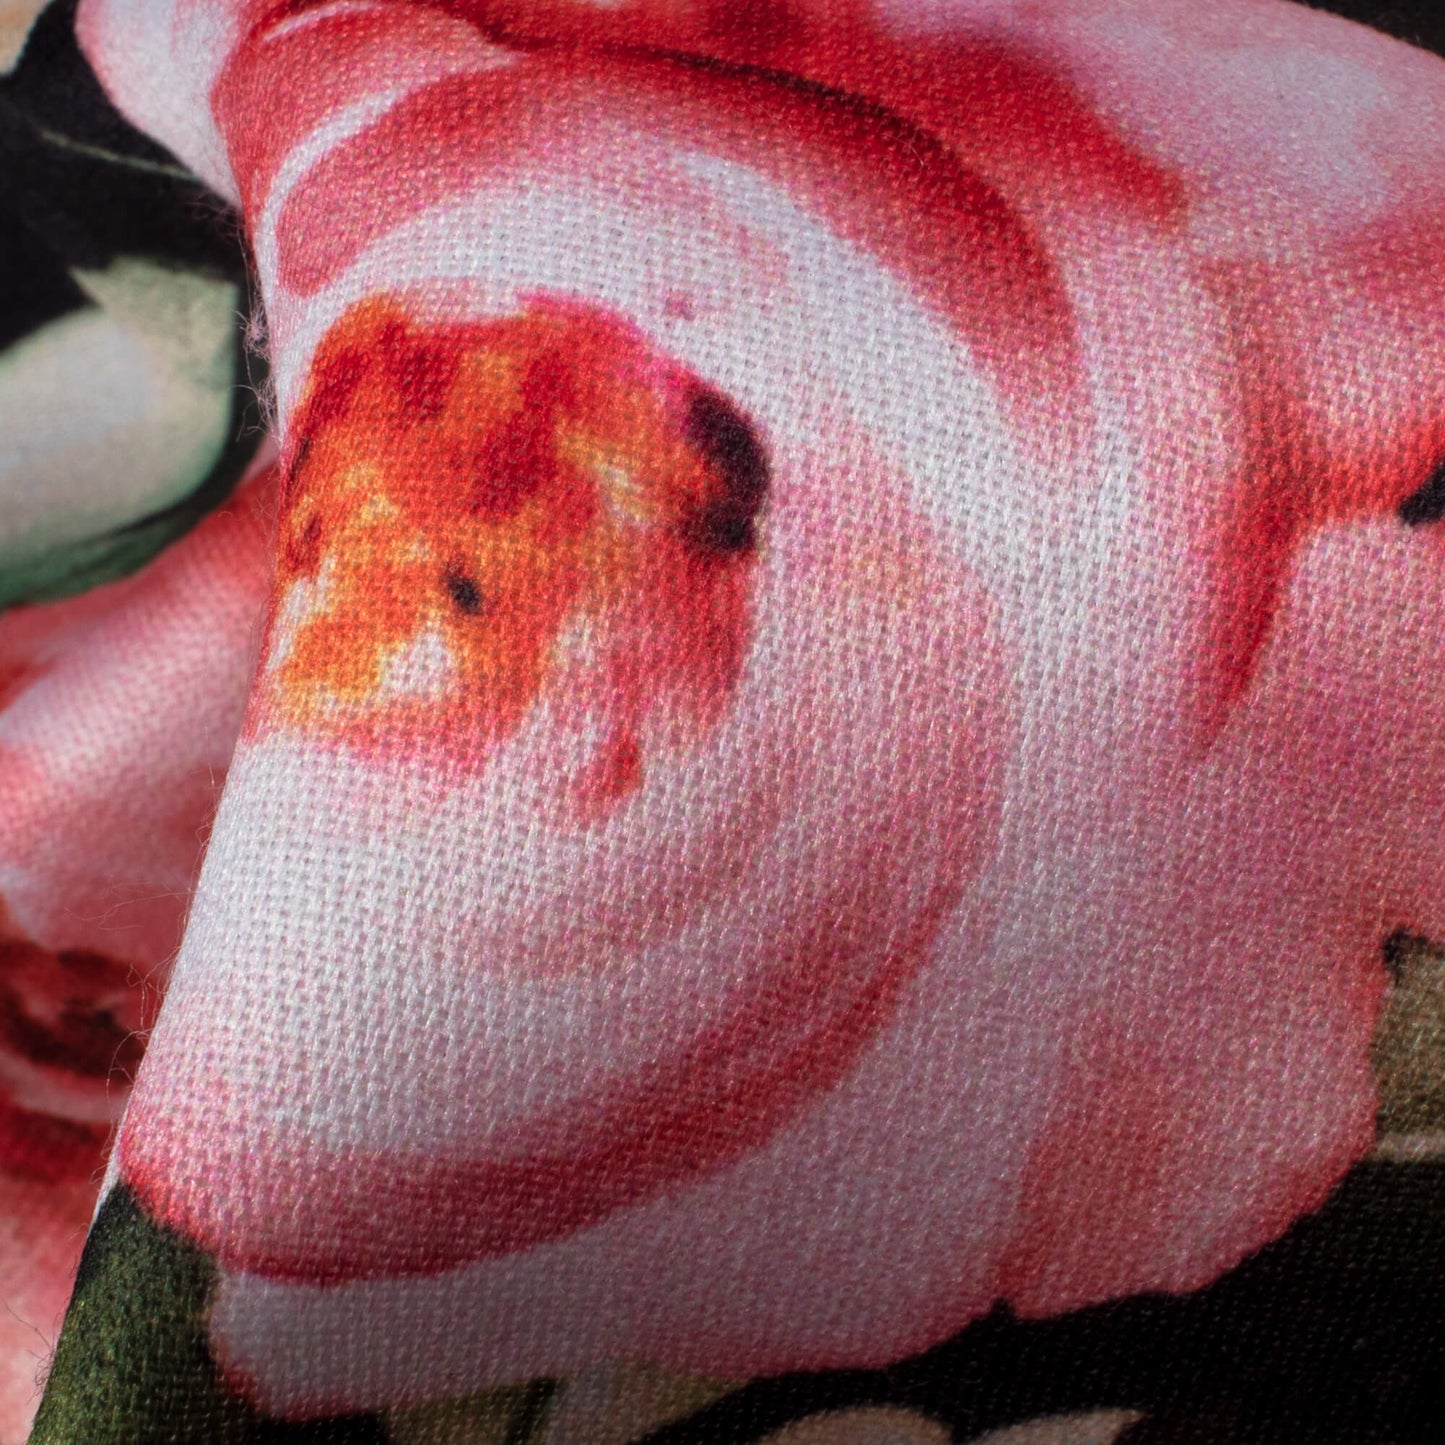 Black And Taffy Pink Floral Pattern Digital Print Jam Satin Fabric